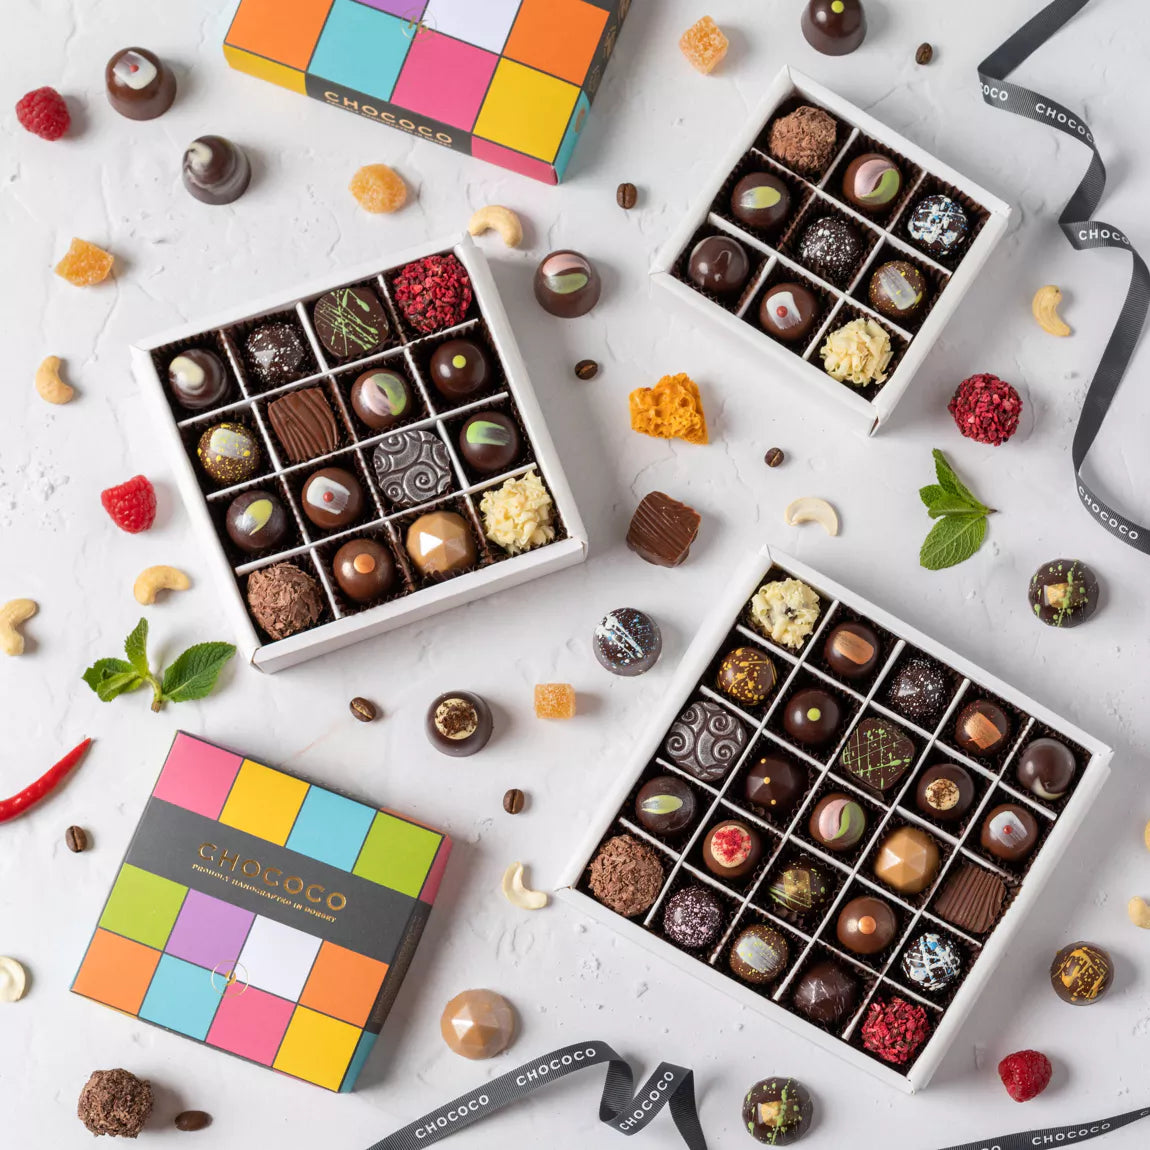 Chococo Luxurious handmade chocolates - 16 Piece Chocolate Selection Box by Chococo